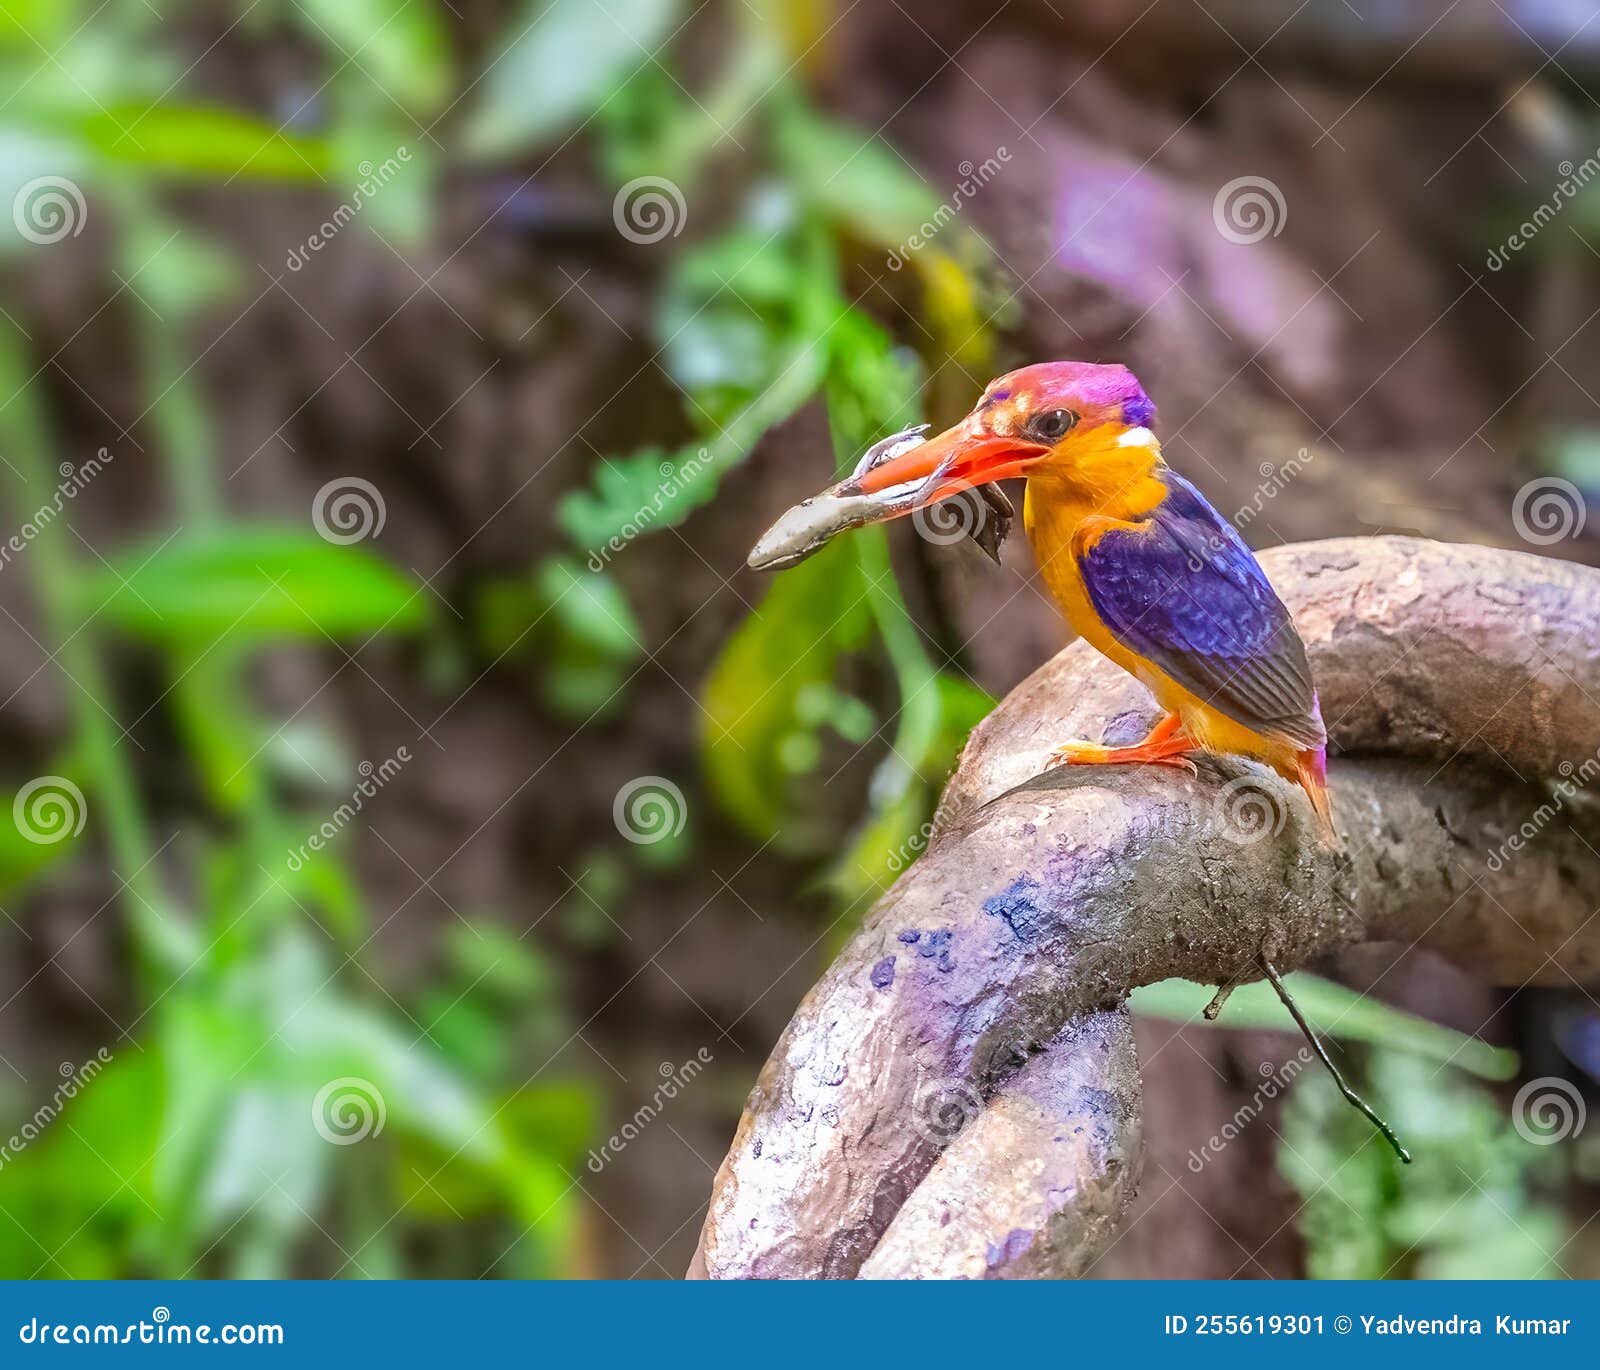 a oriental dwarf kingfisher with a kill